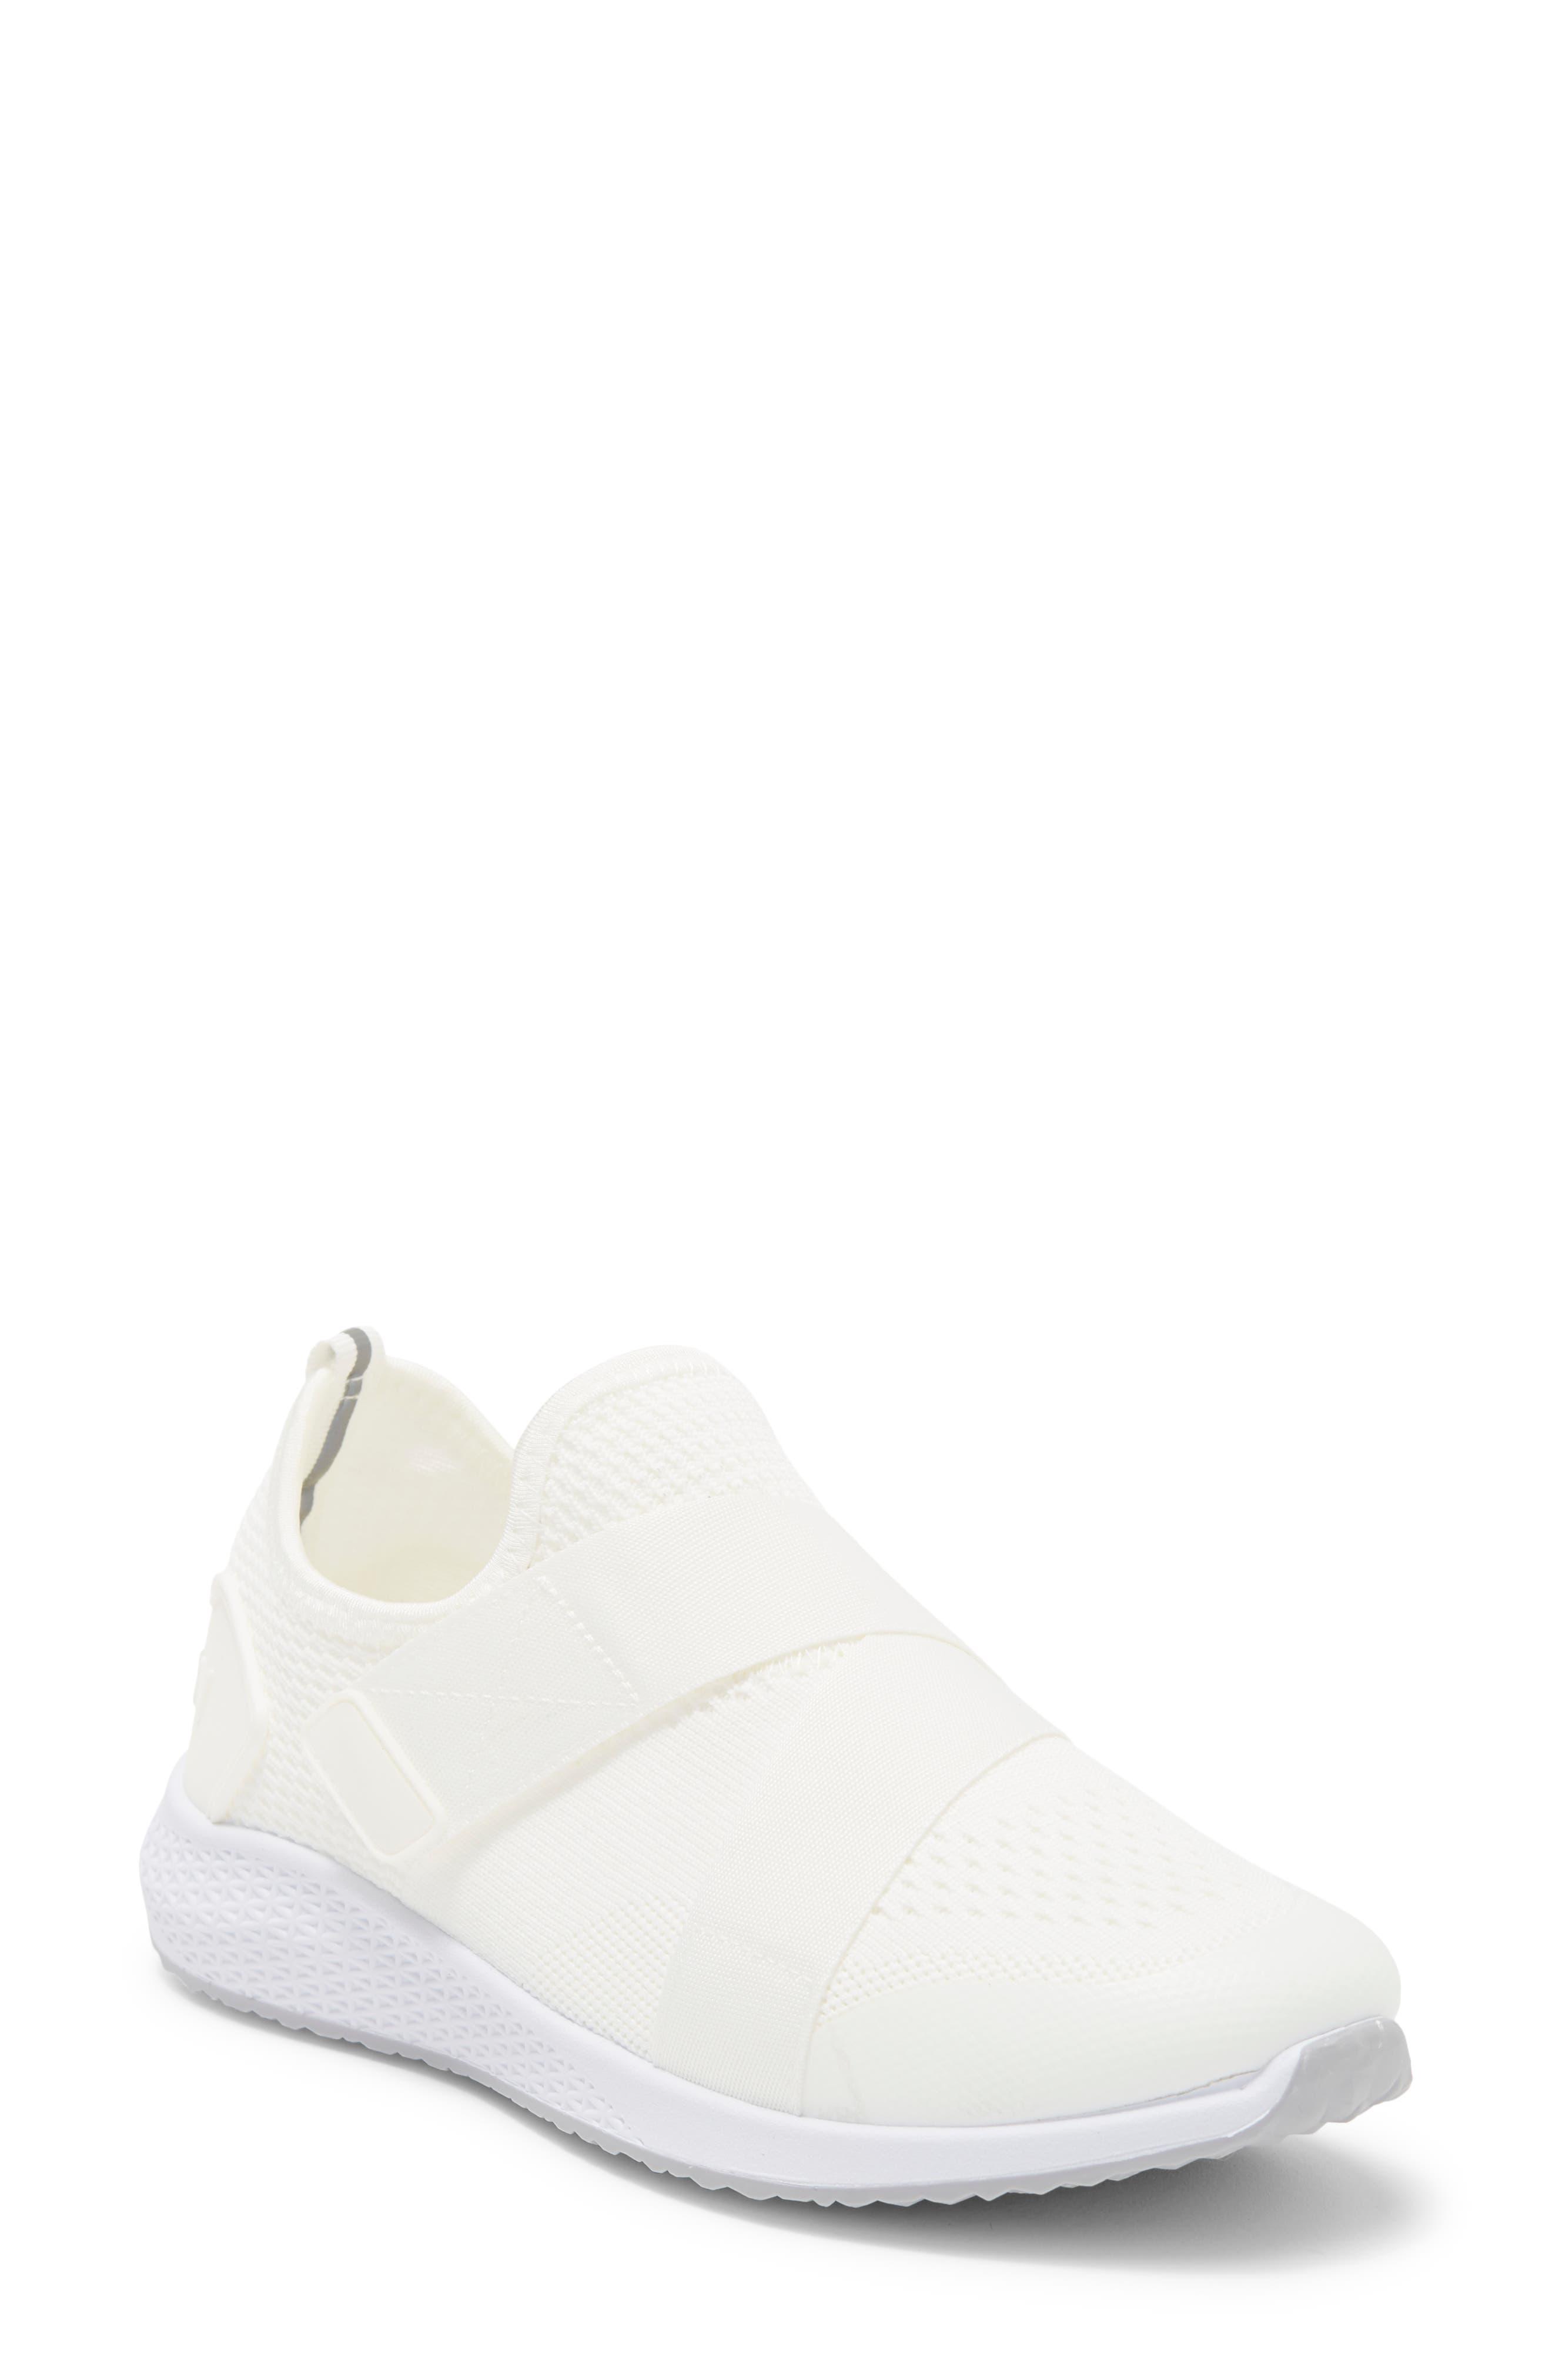 Danskin Slip-on Sneaker in White | Lyst